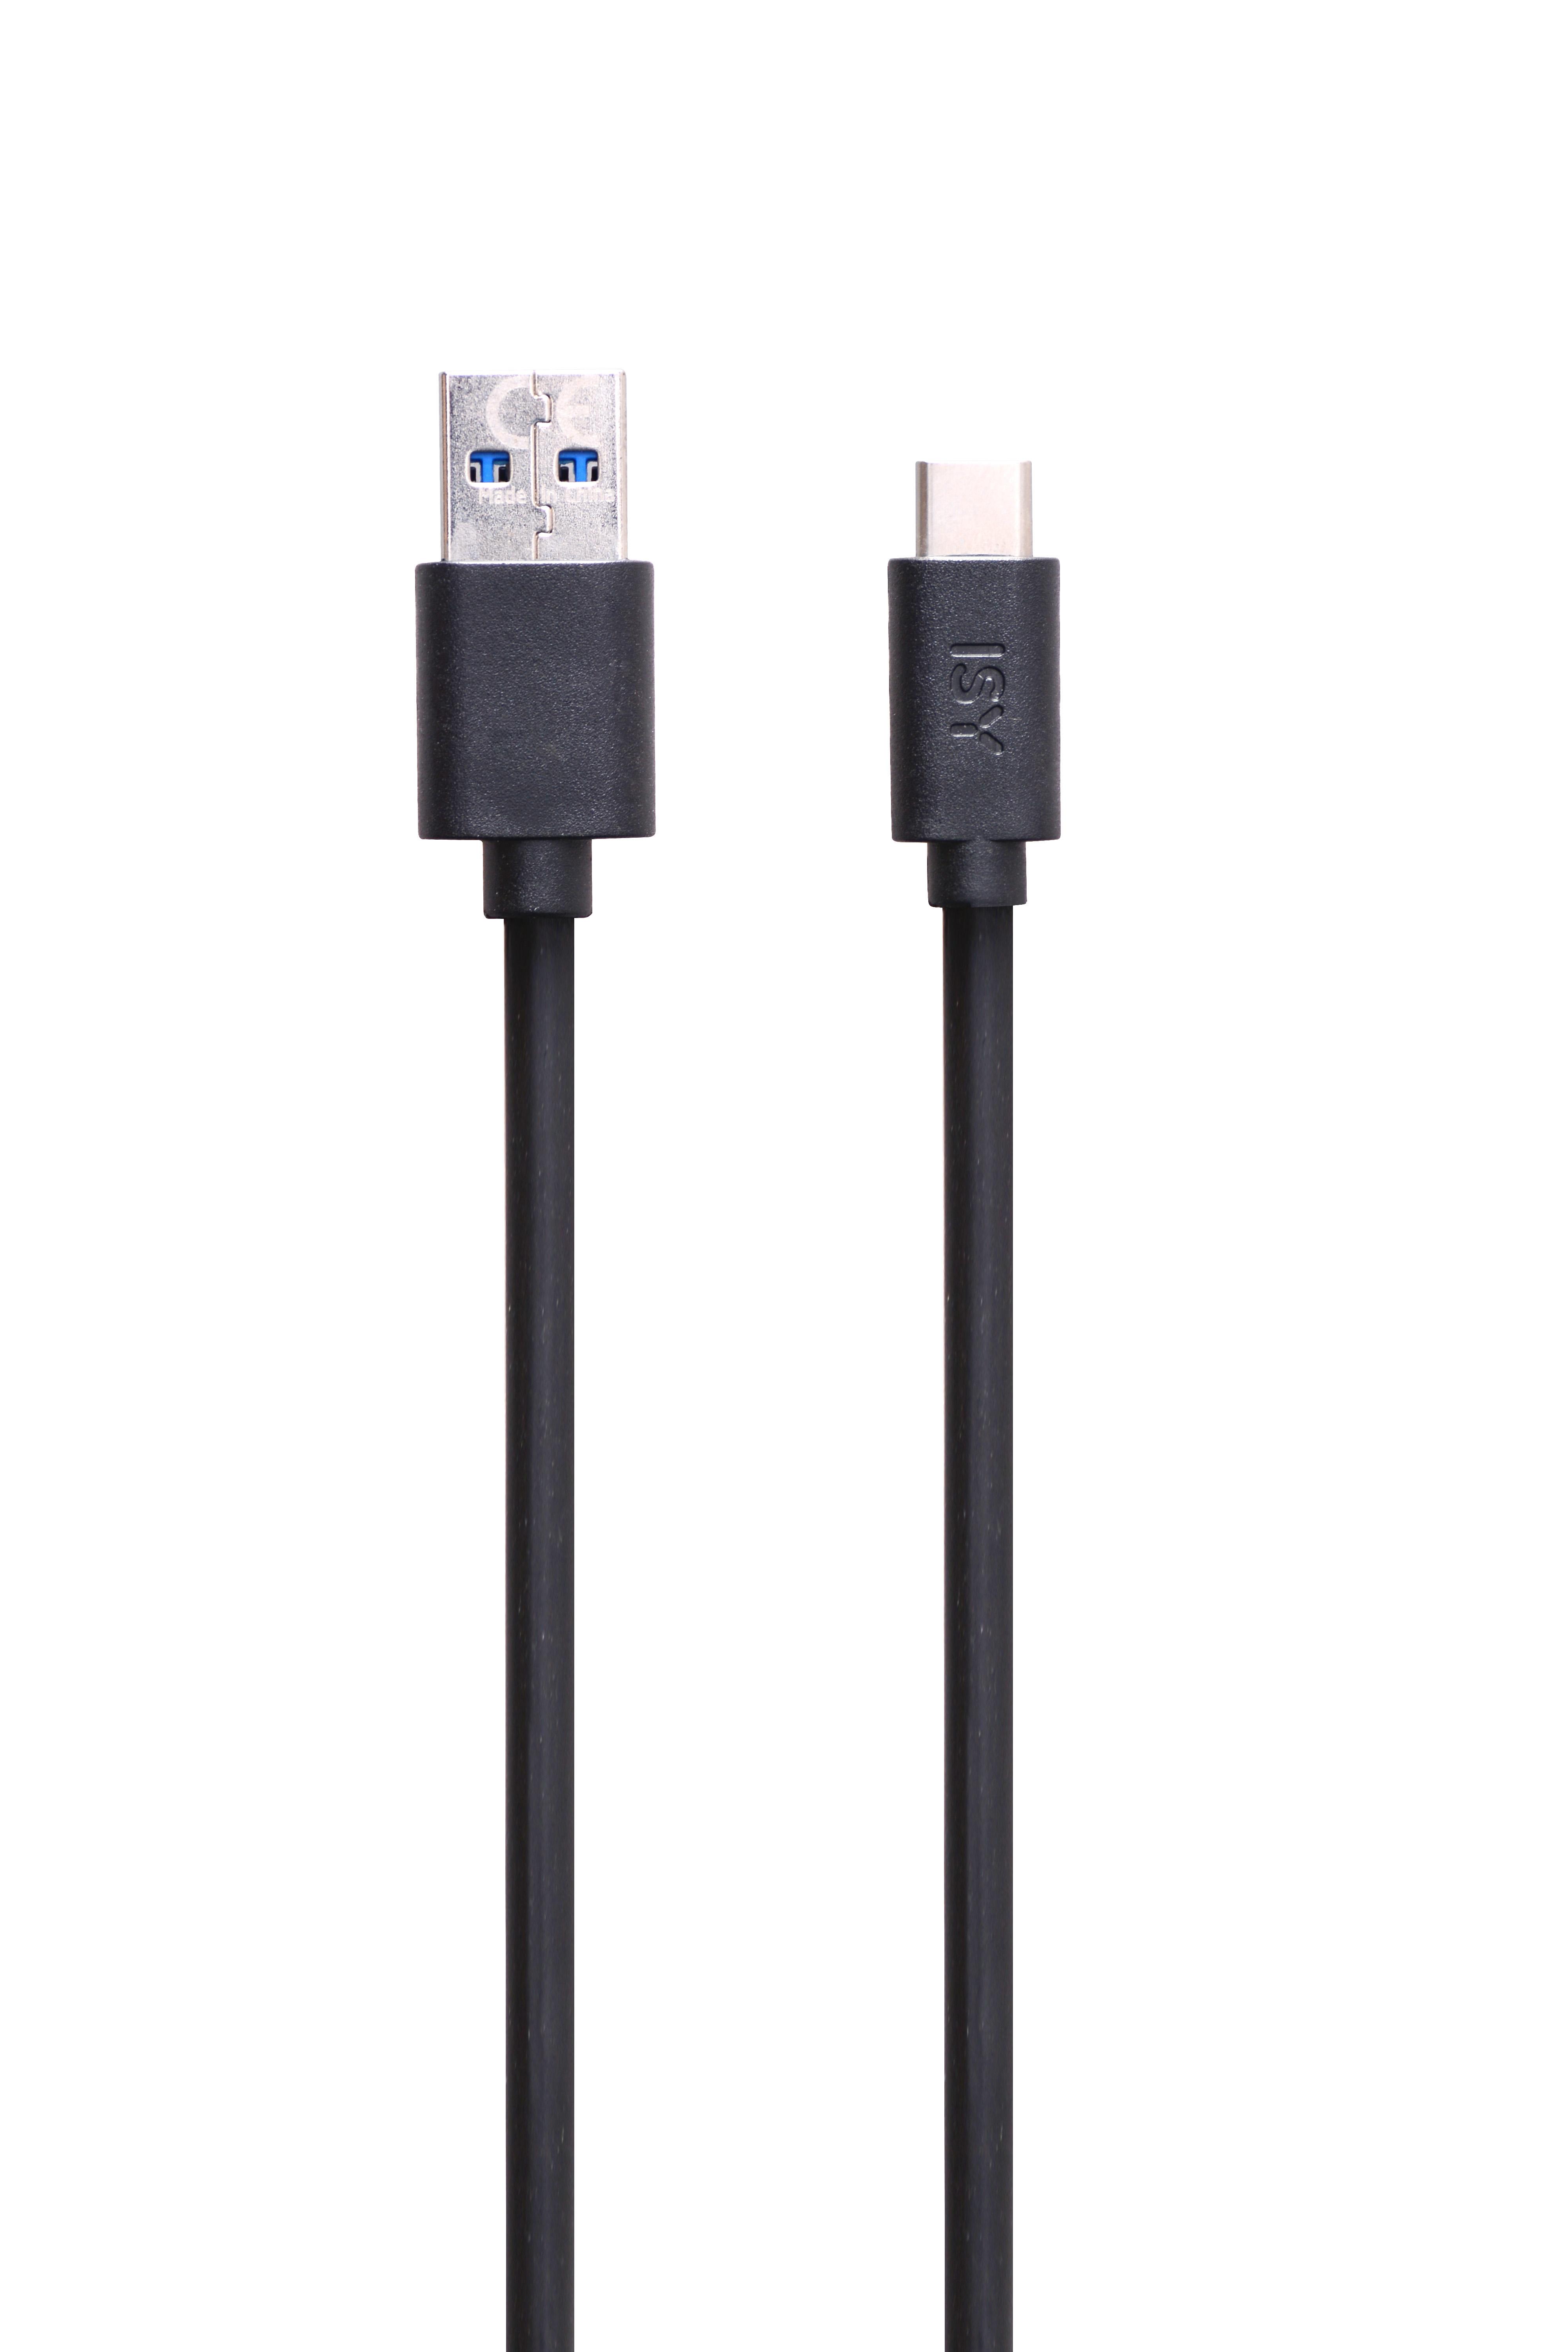 ISY IUC-3200 USB-C m, Datenkabel, Schwarz 2 3.0 Datenkabel/Ladekabel